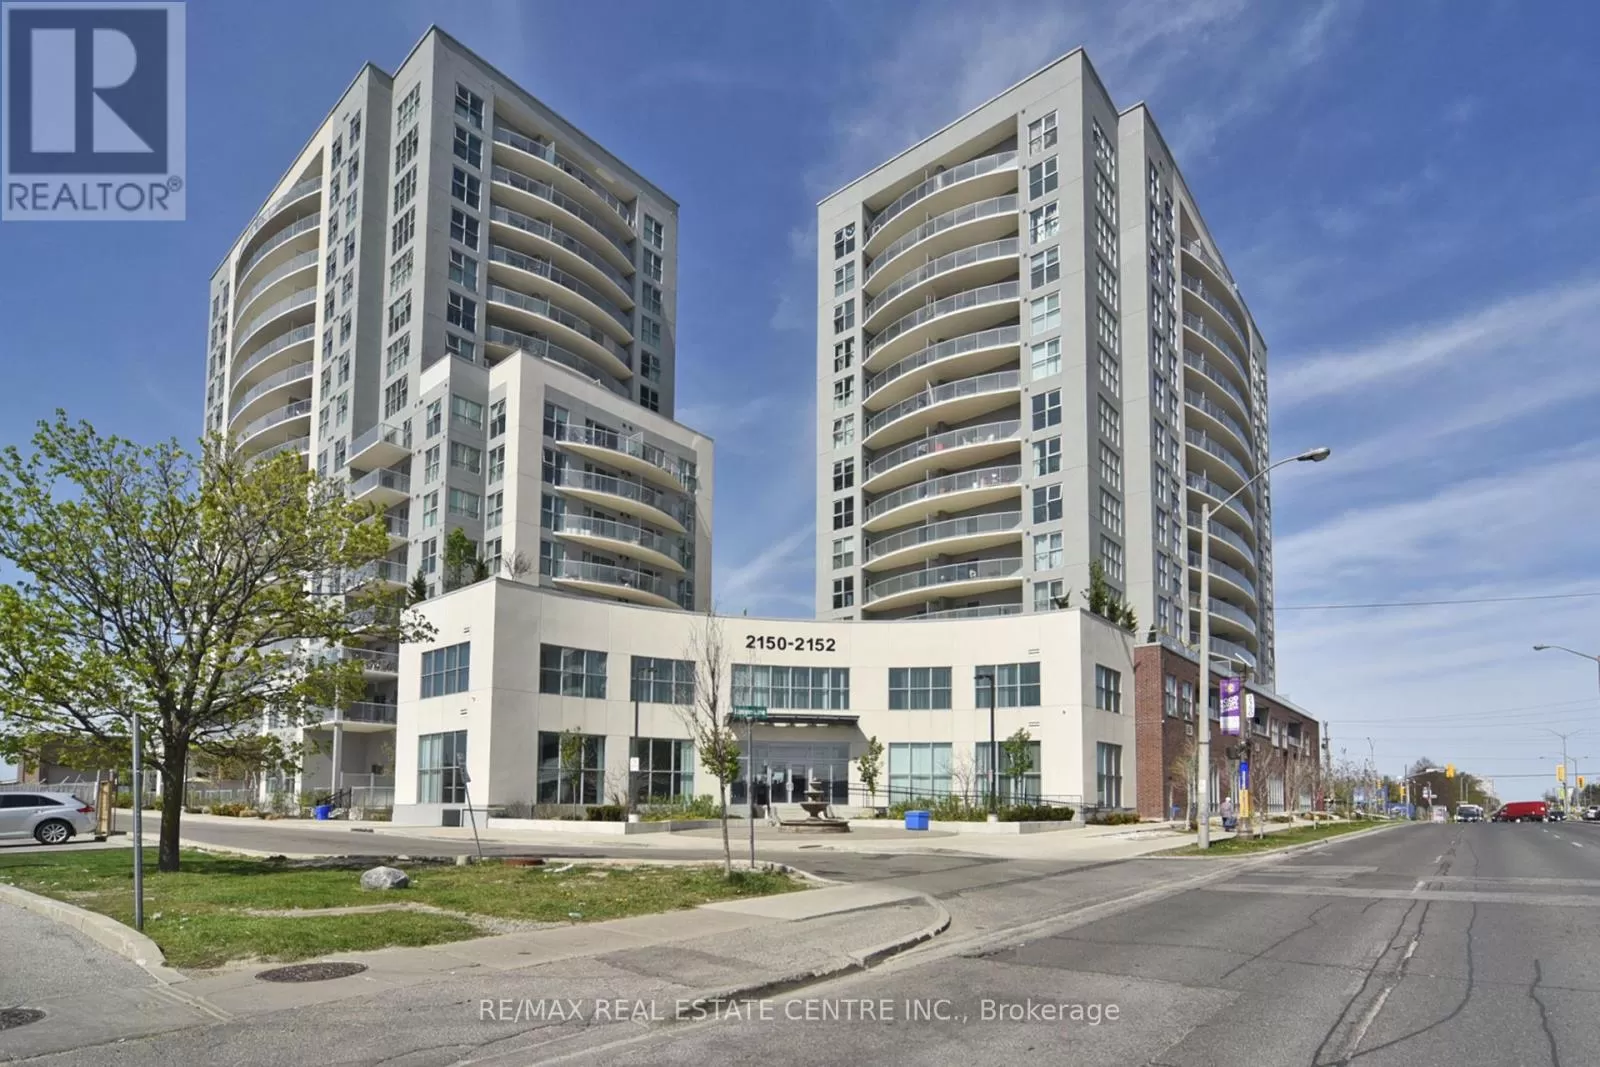 Apartment for rent: 808 - 2152 Lawrence Avenue E, Toronto, Ontario M1R 0B7